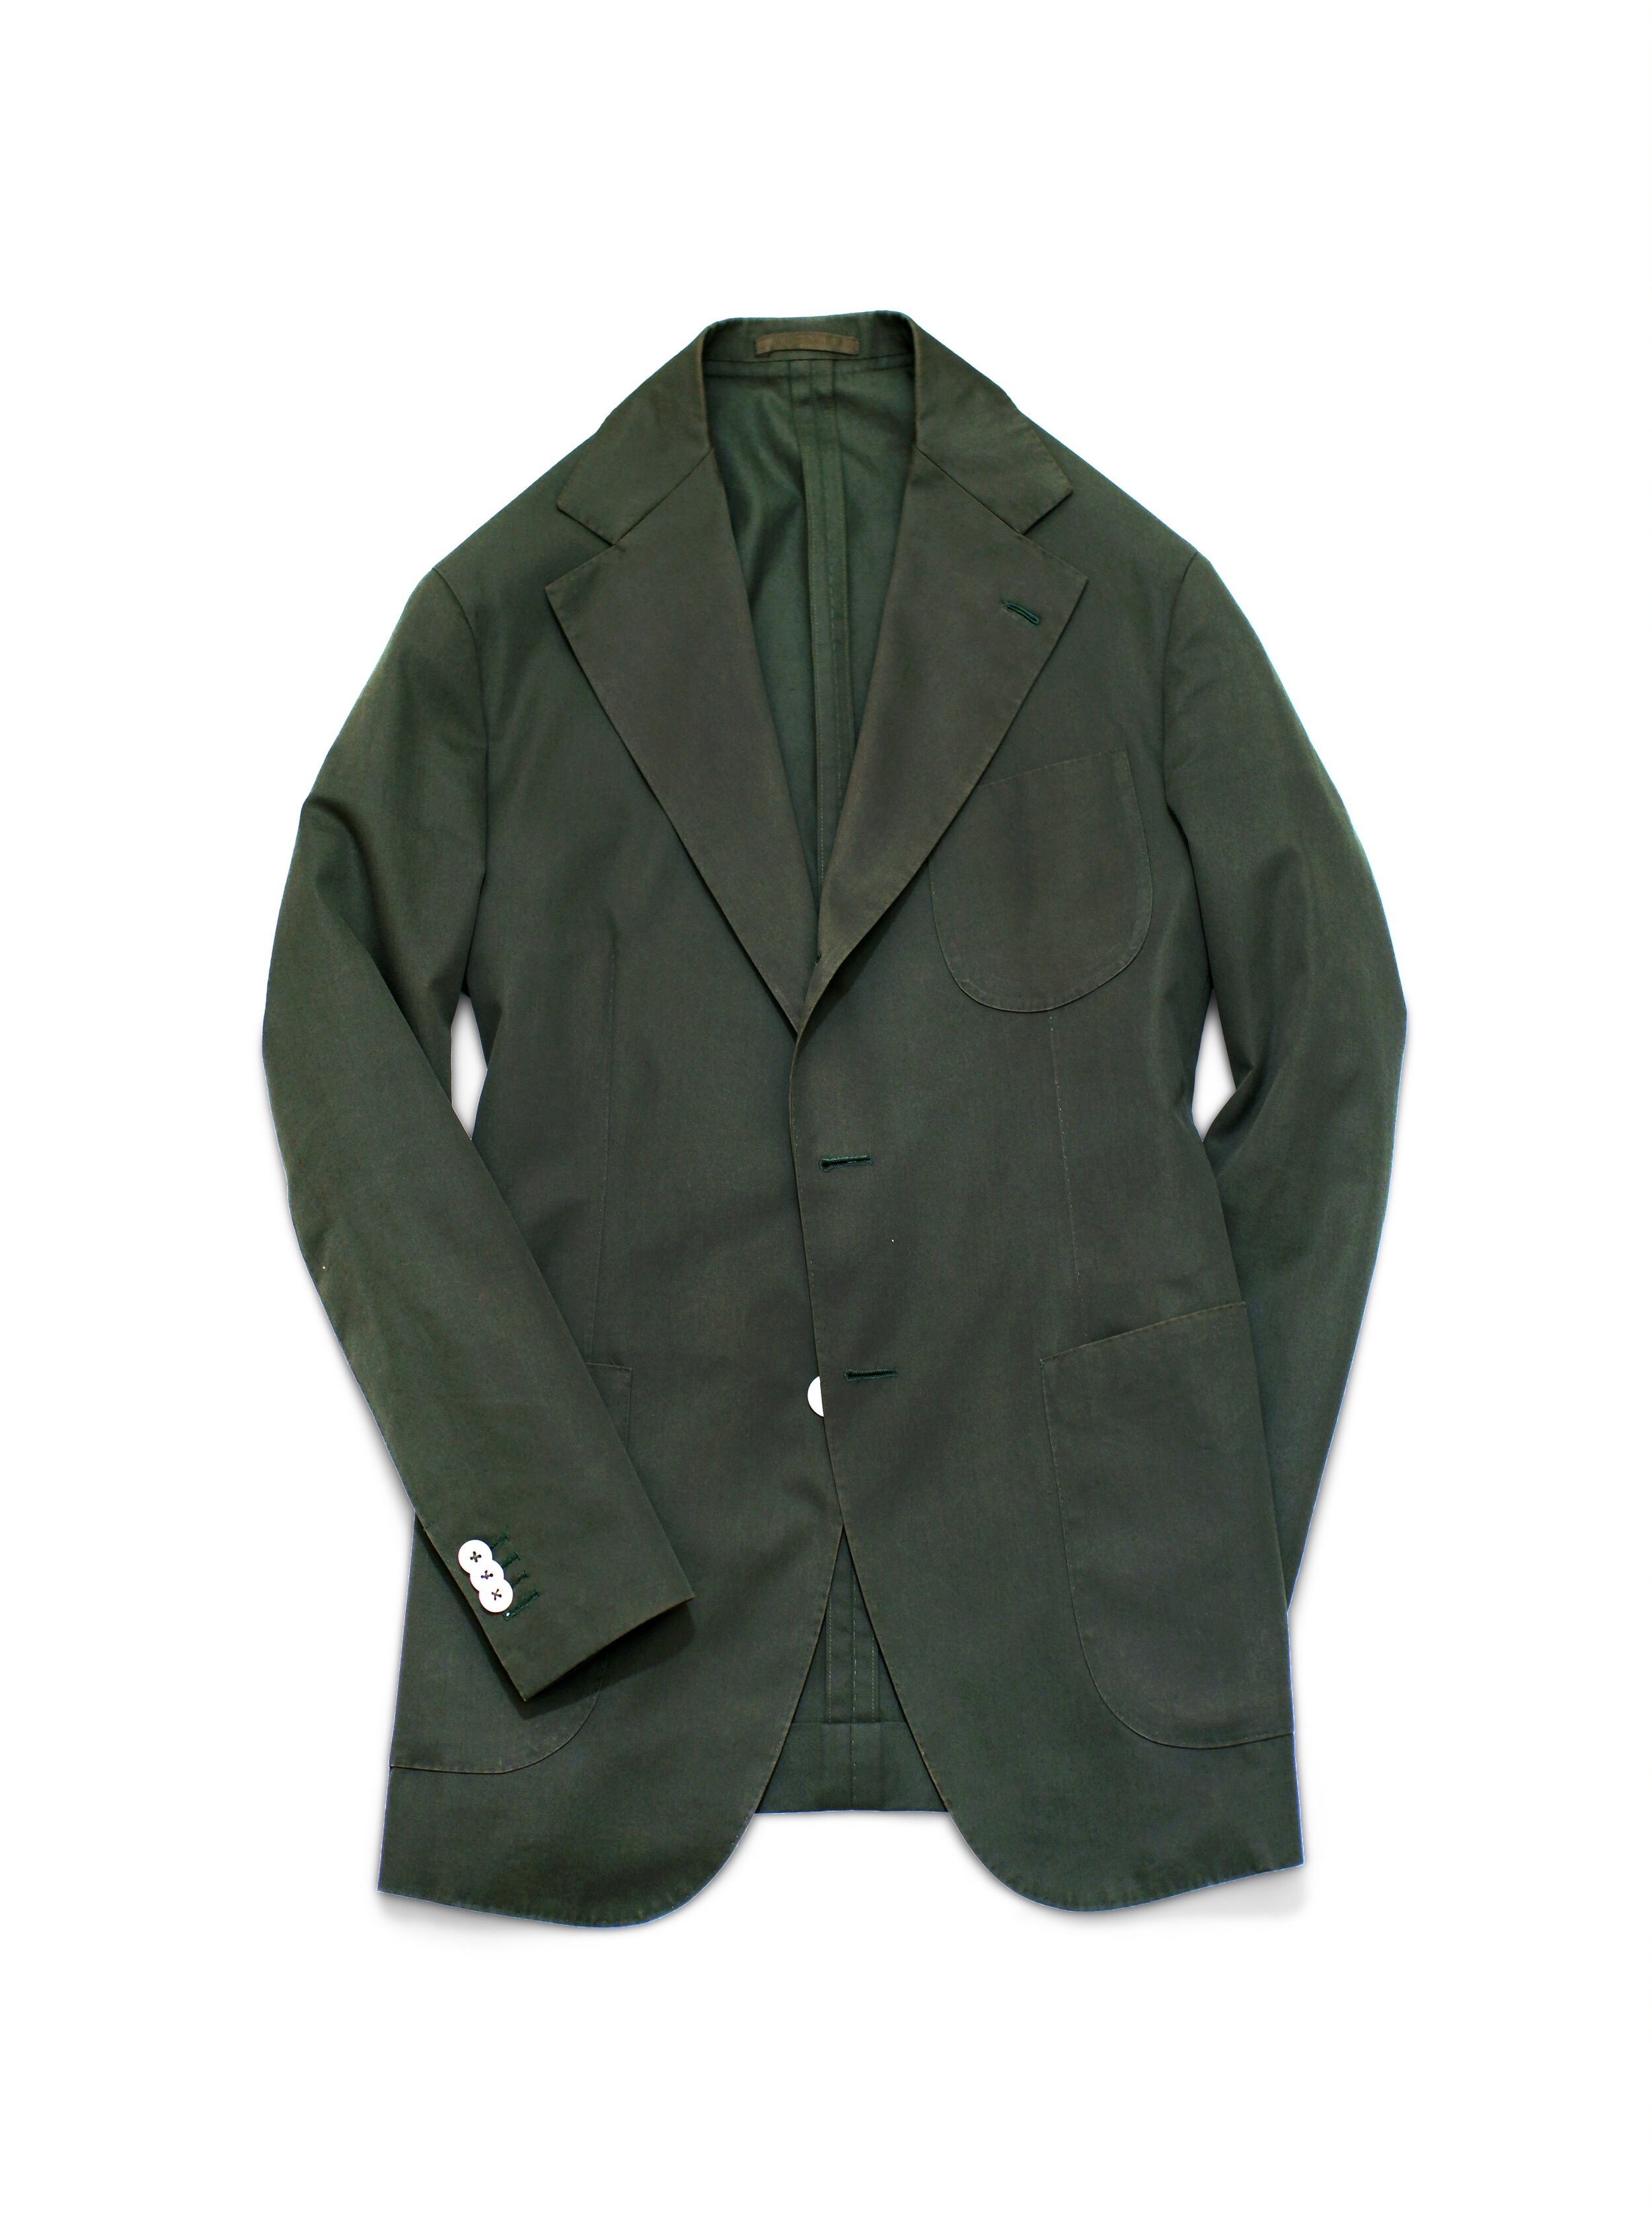 green cotton jacket product.jpg